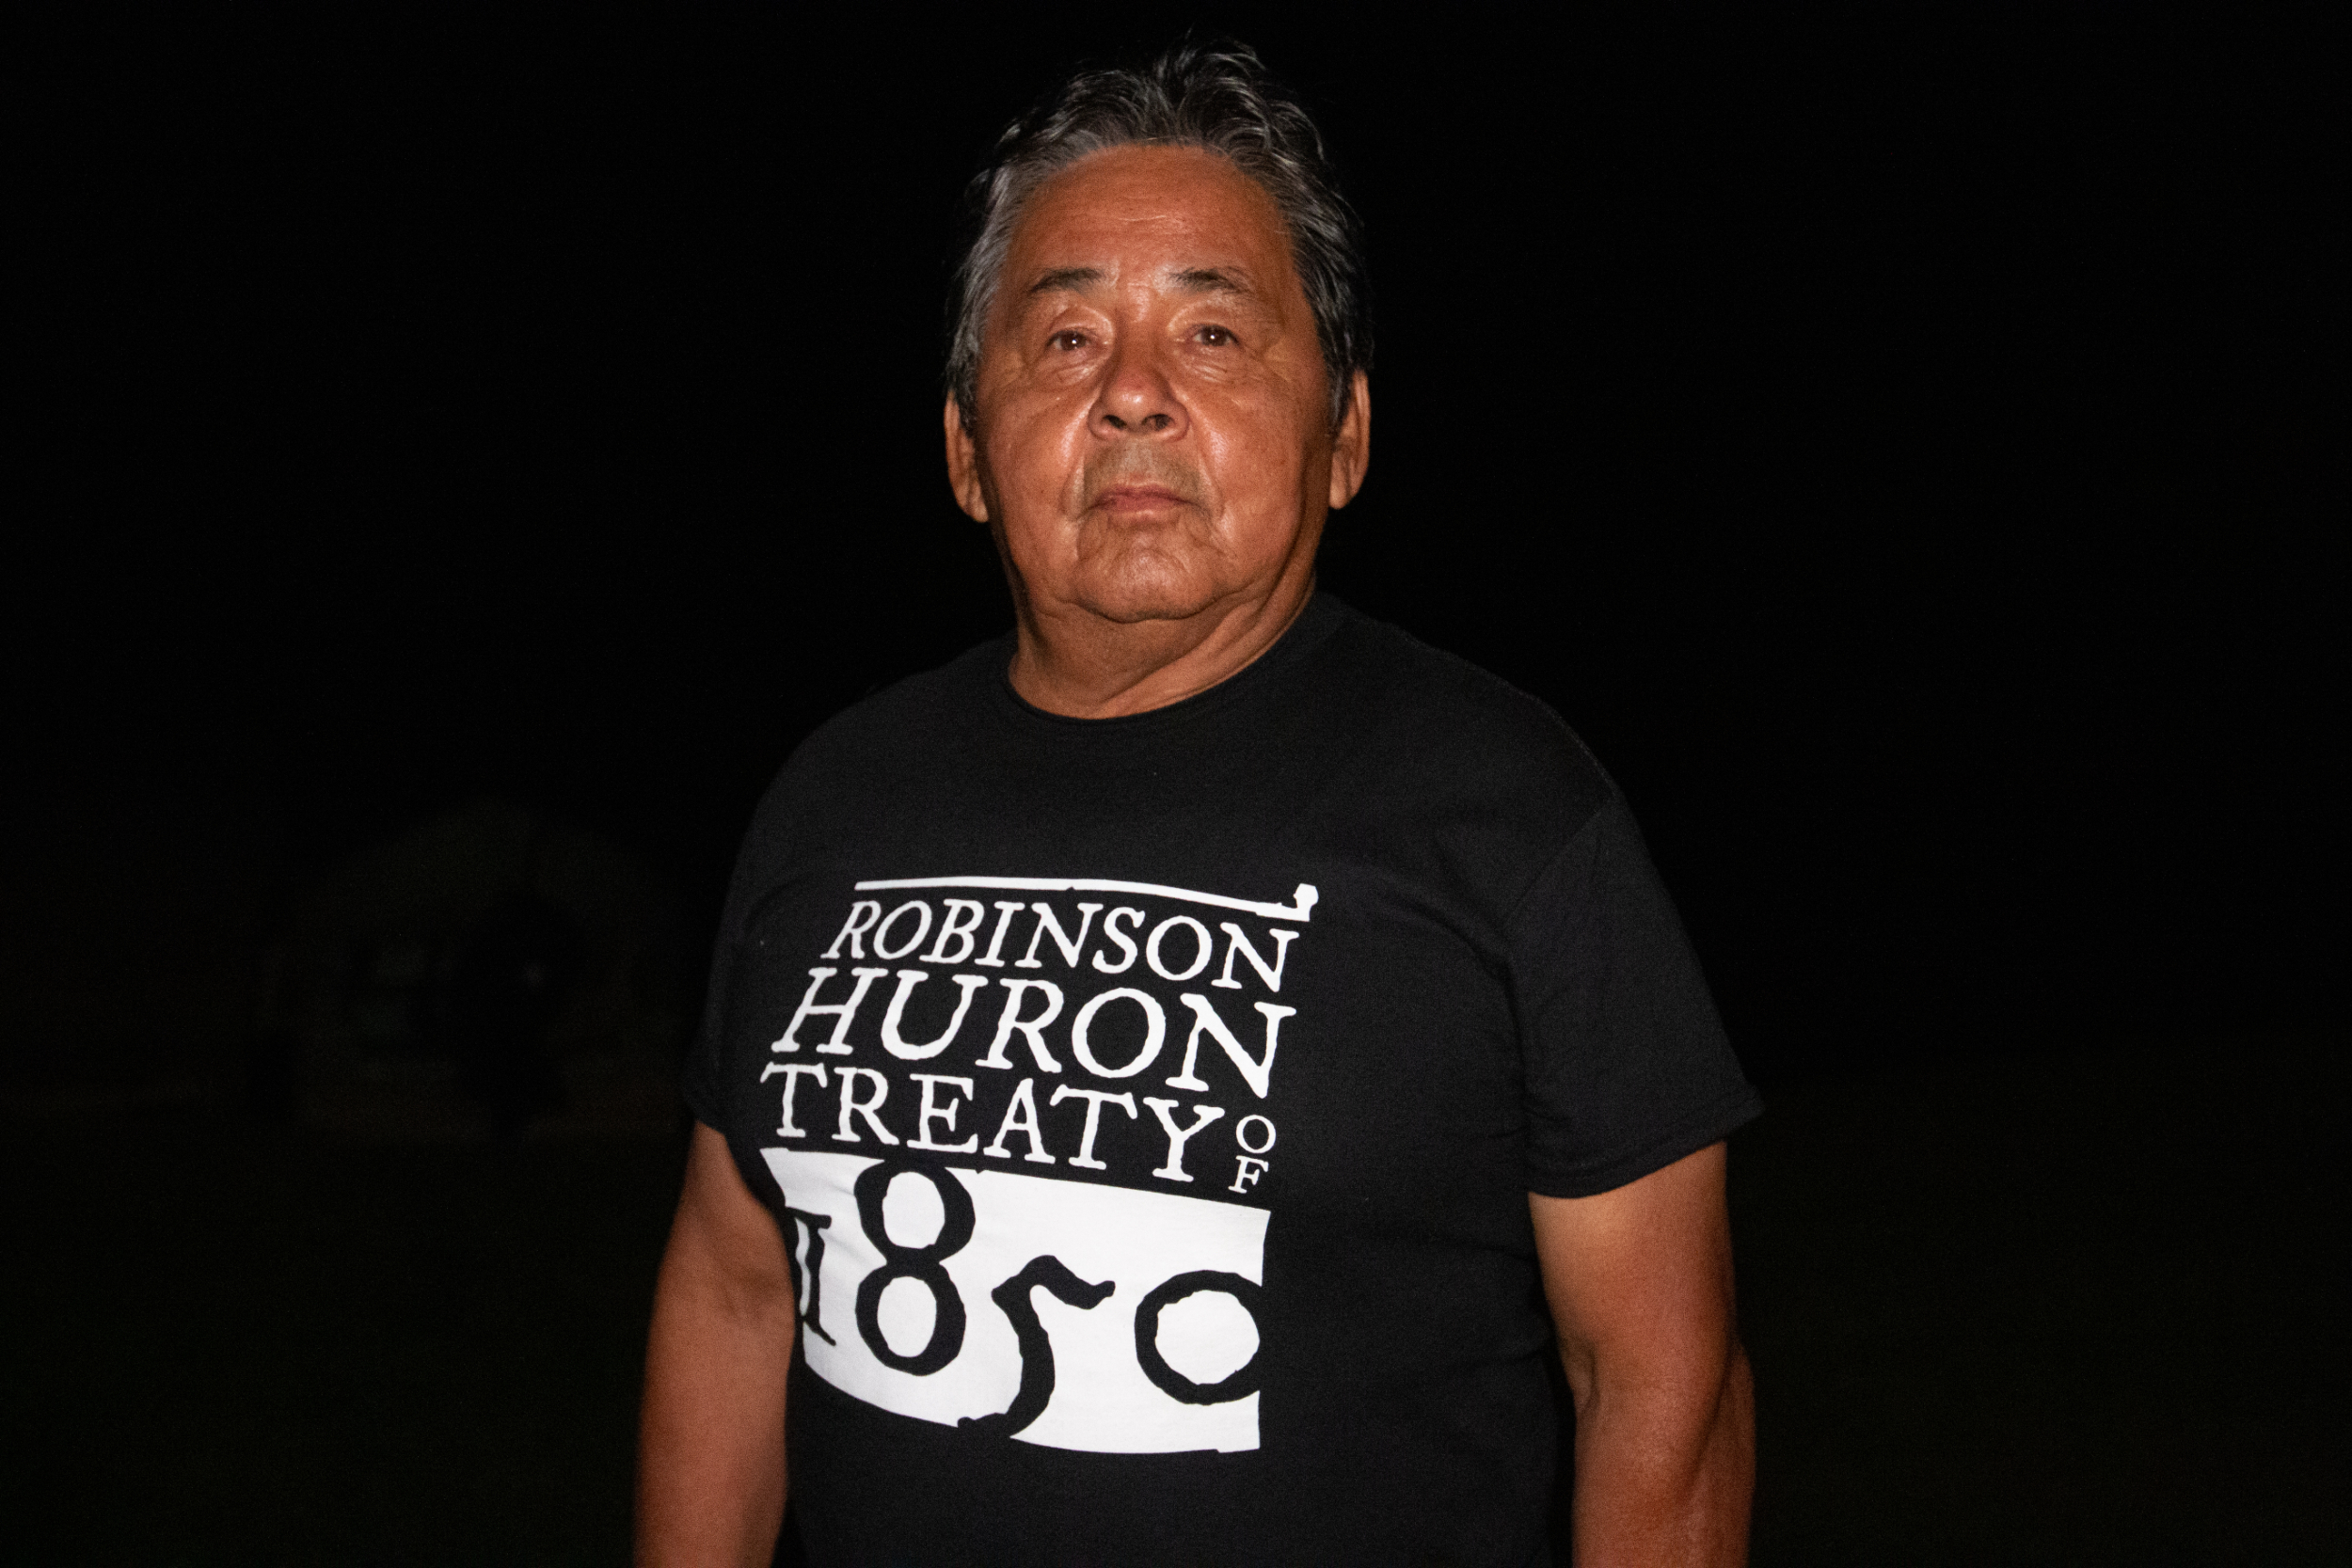 Ken Meawasige wearing a shirt that says "Robinson Huron Treaty of 1850"